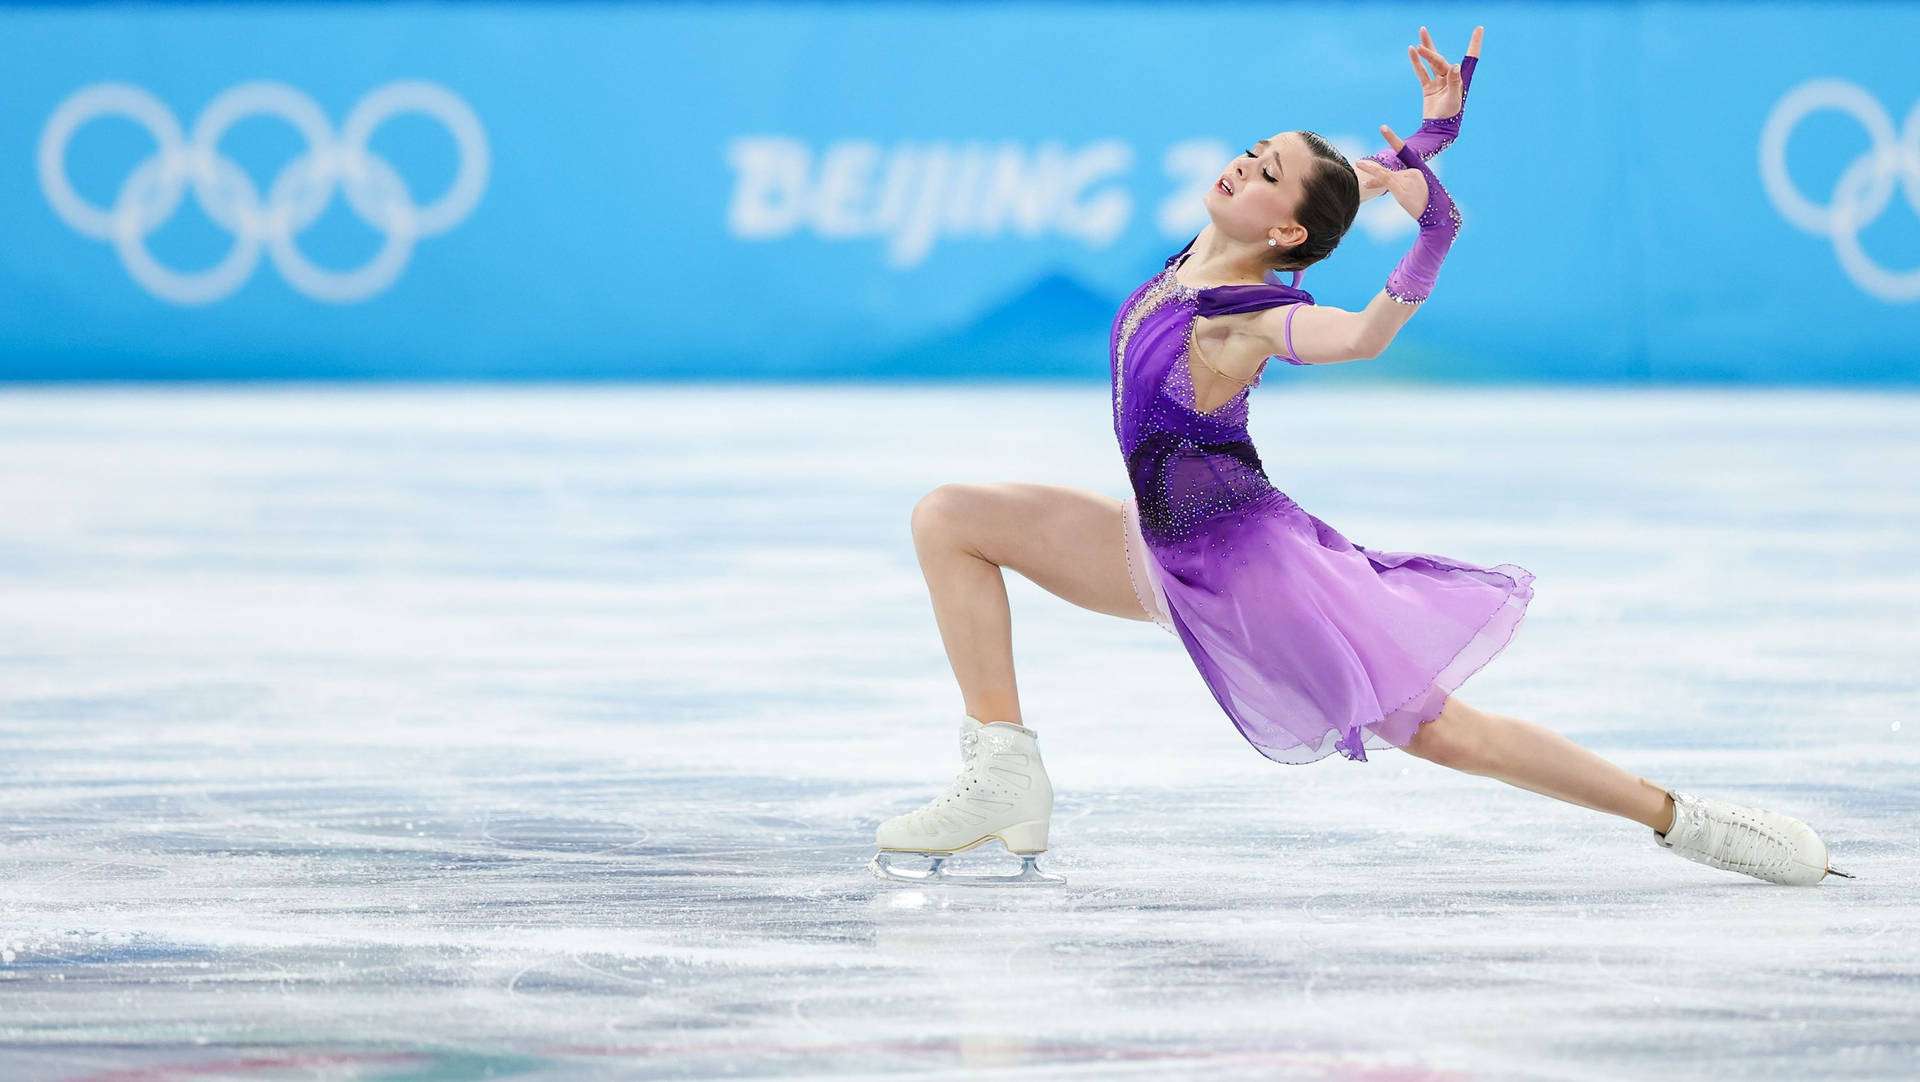 Russian Figure Skating Prodigy Kamila Valieva Skillfully Performs at the 2022 Olympics. Wallpaper